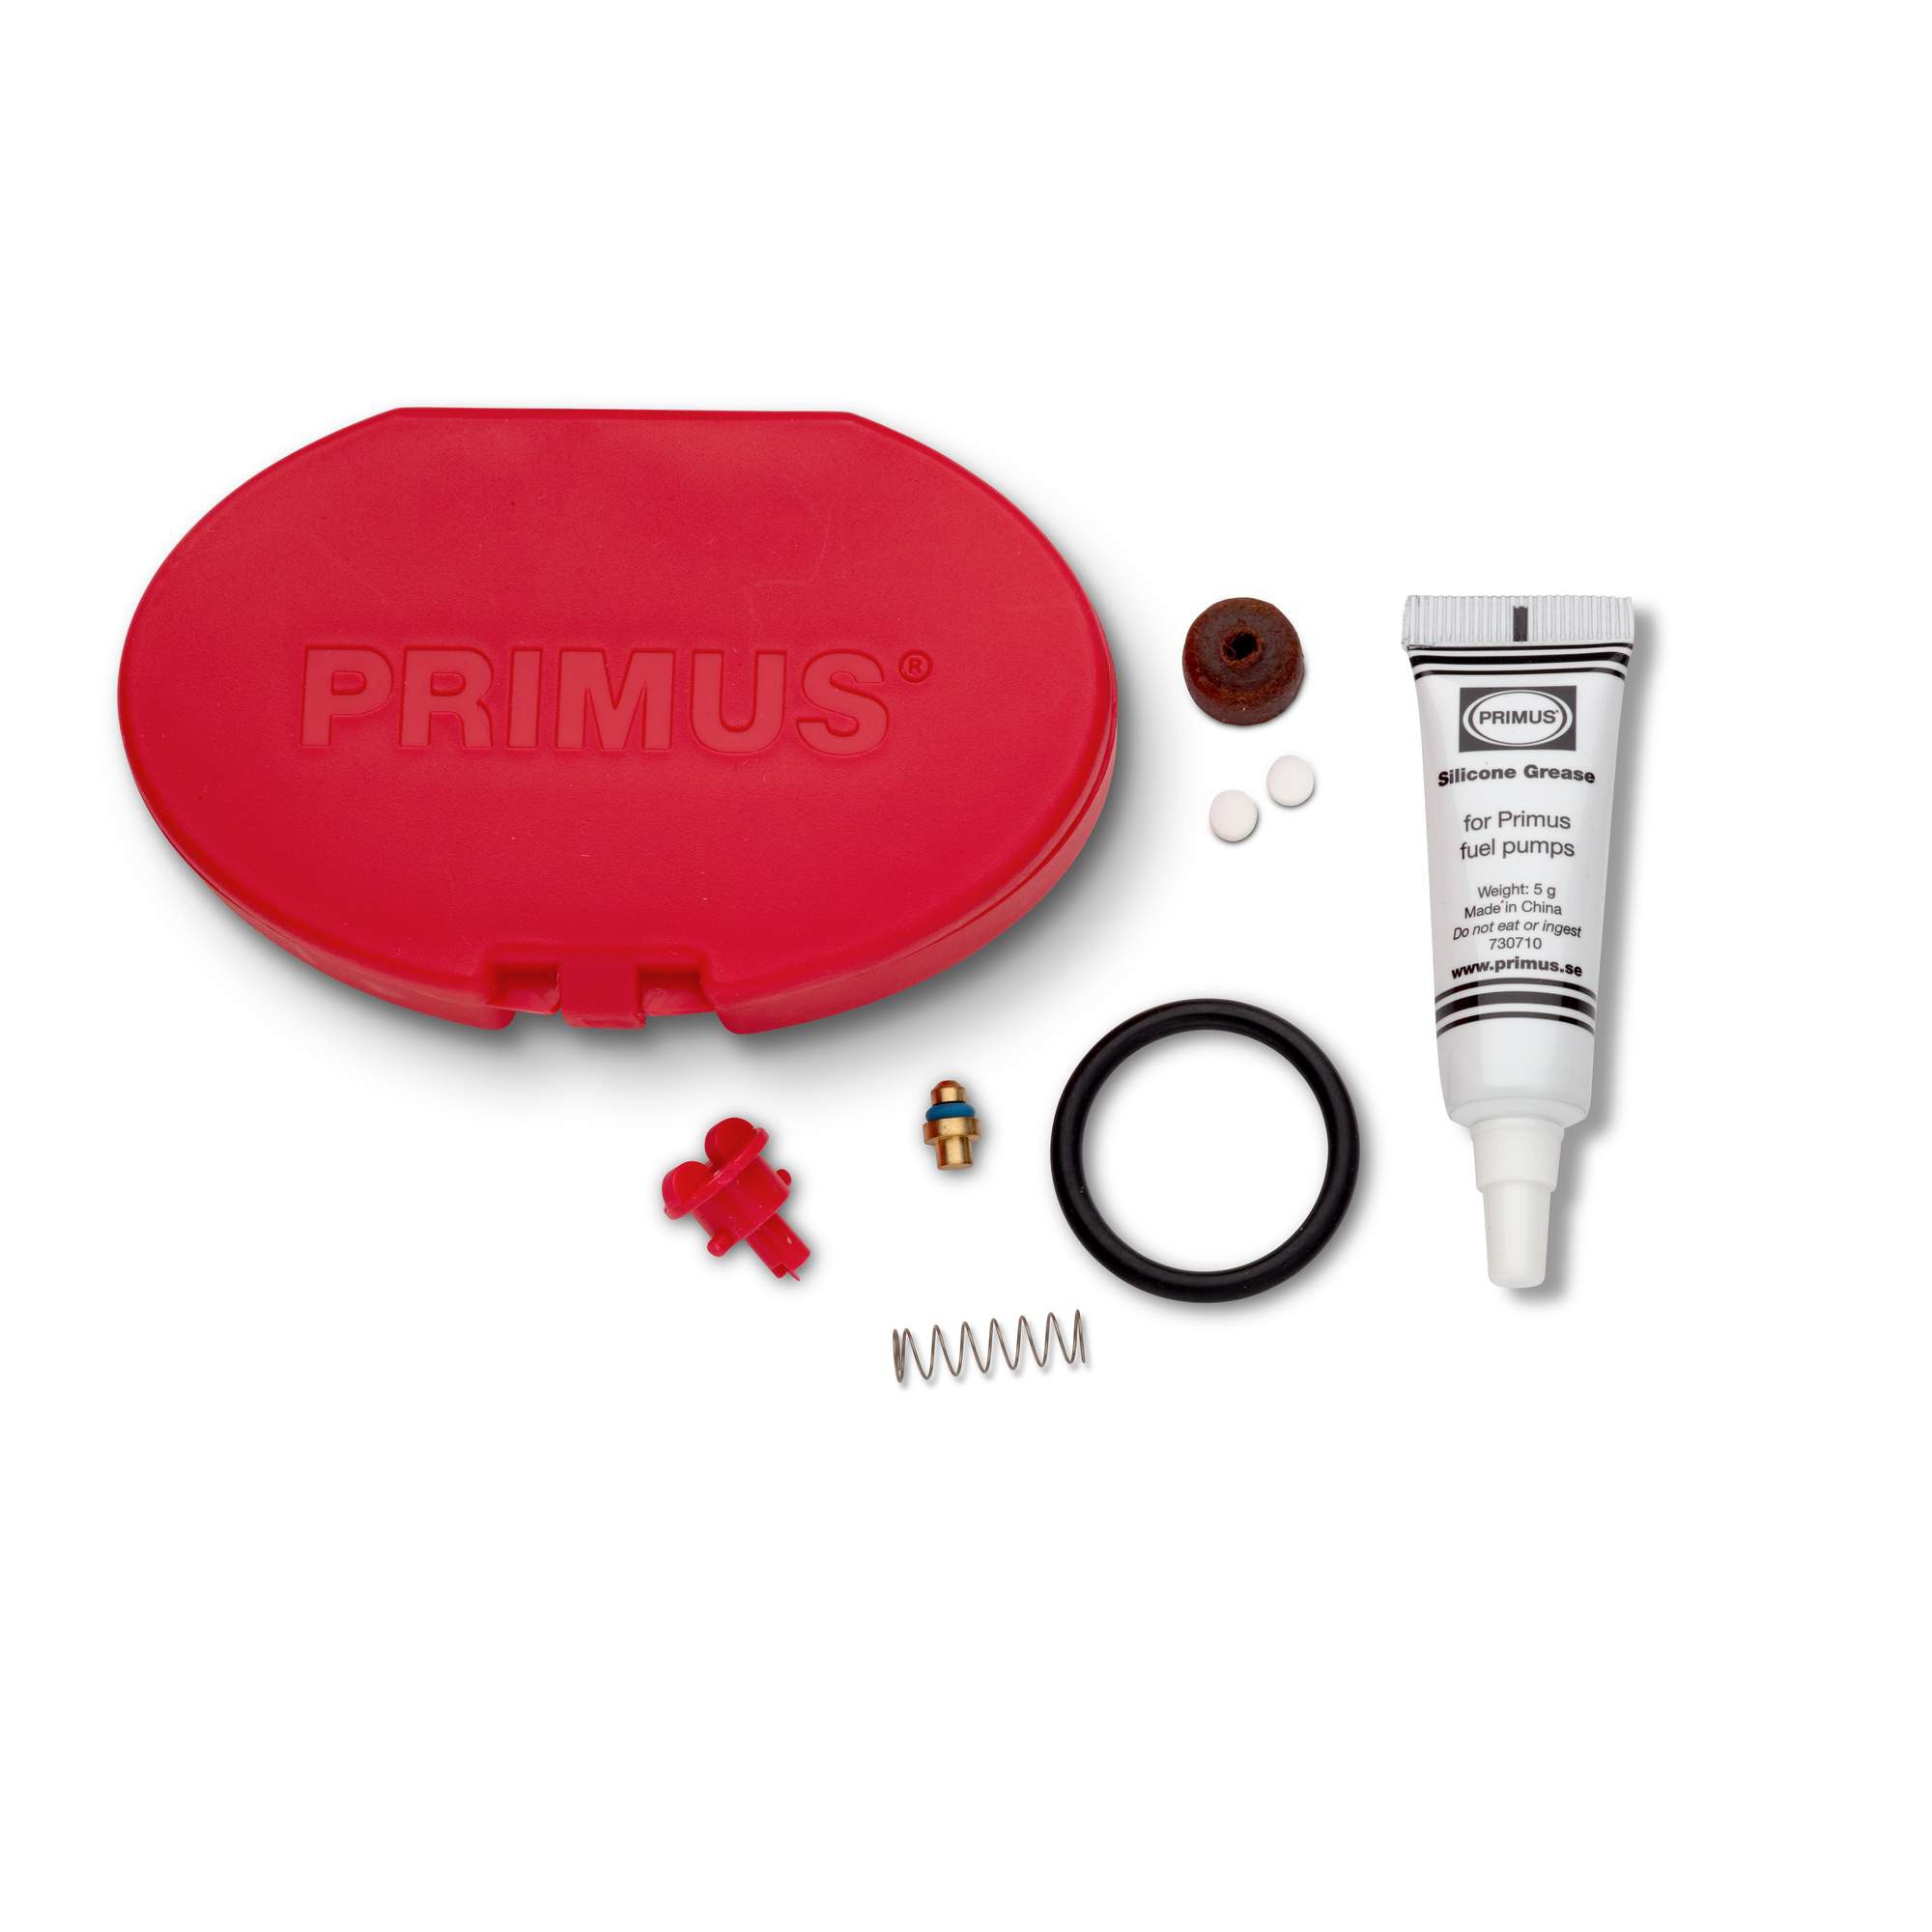 Primus service kit